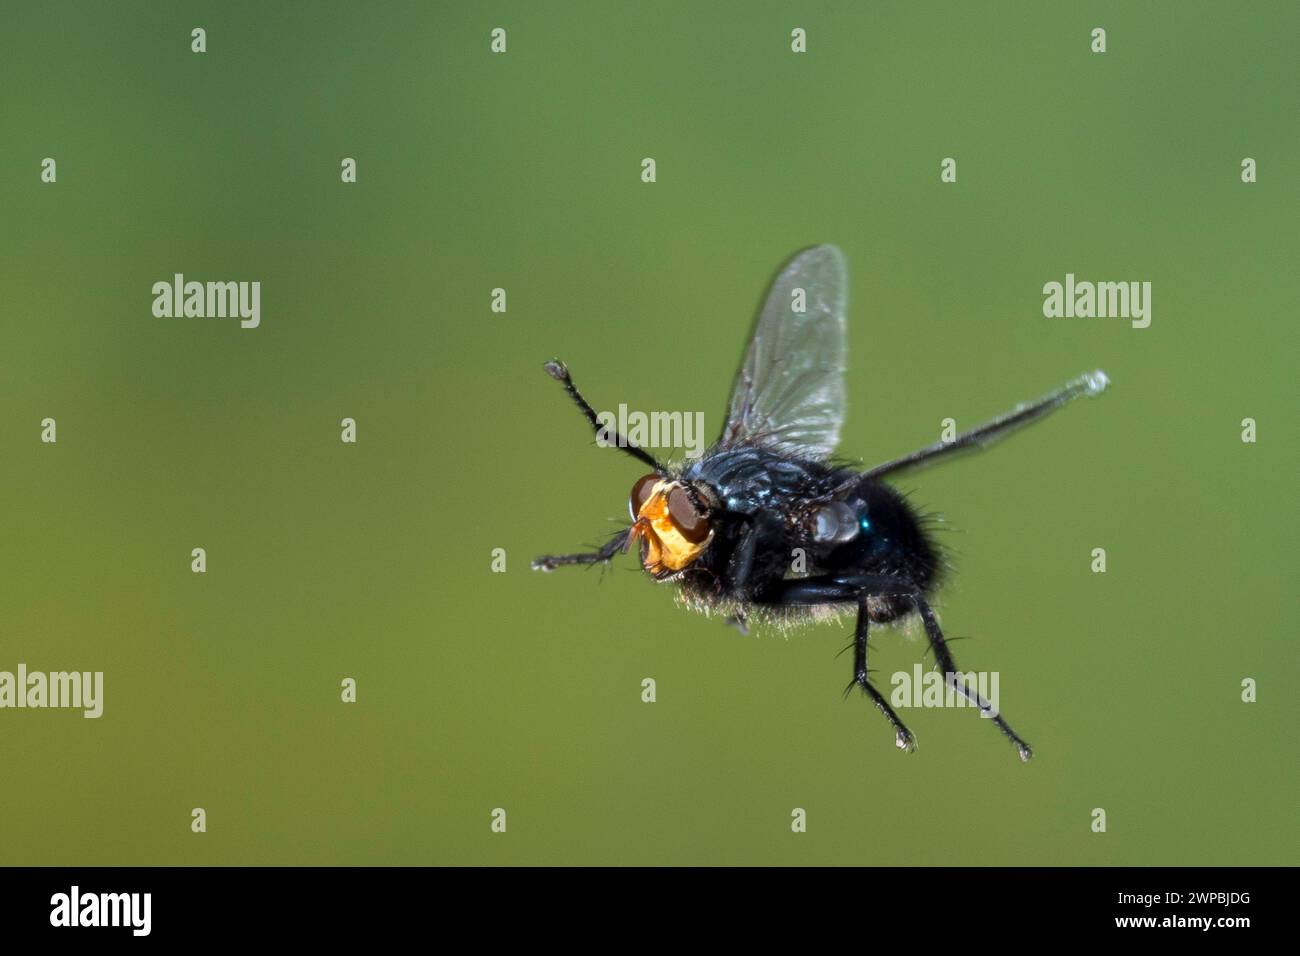 Fly of the dead, Bluebottle Blow Fly (Cynomya mortuorum, Cynomya hirta), male in flight, high speed photography, Germany Stock Photo